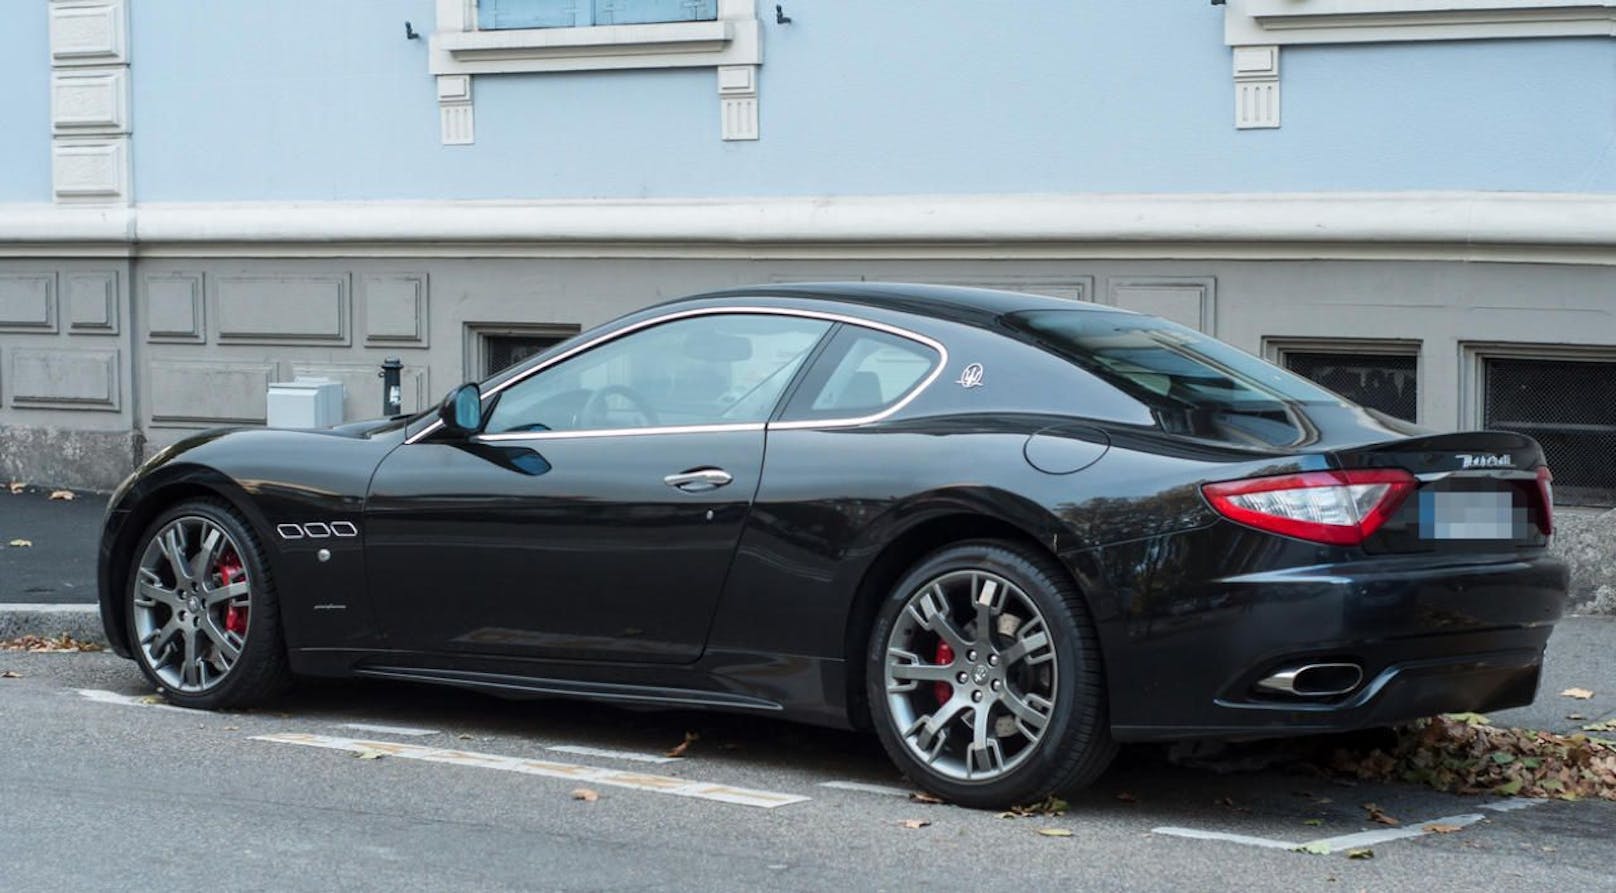 Die Polizei stoppte den betrunkenen Maserati-Fahrer